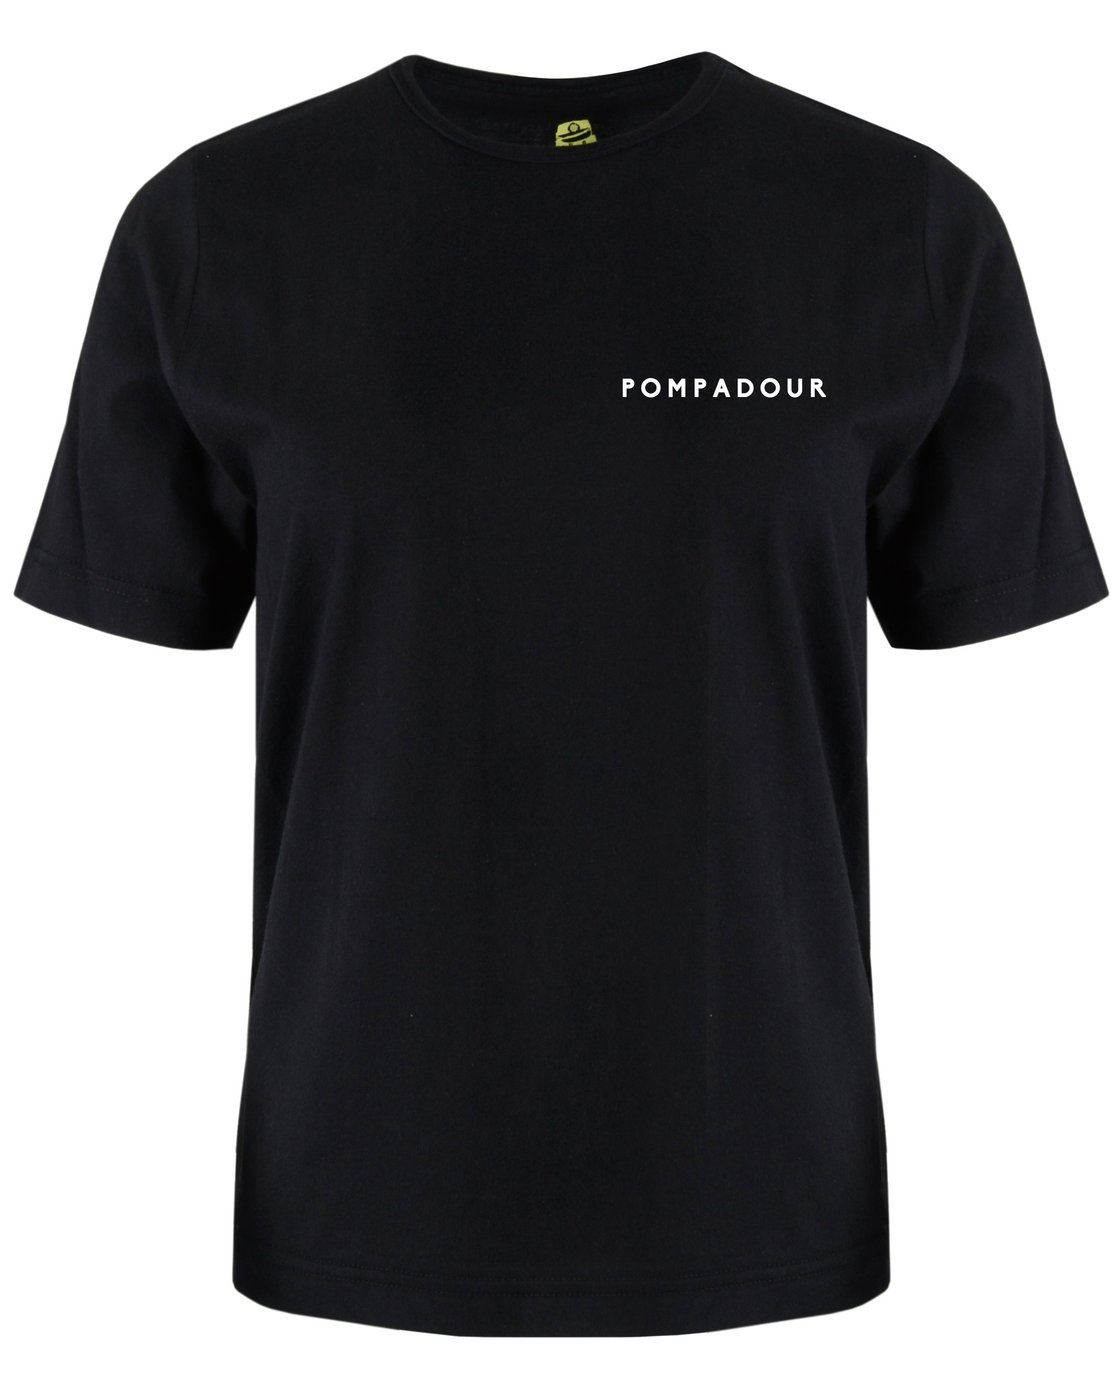 Image of Pompadour Embroidered T-Shirt (Black)